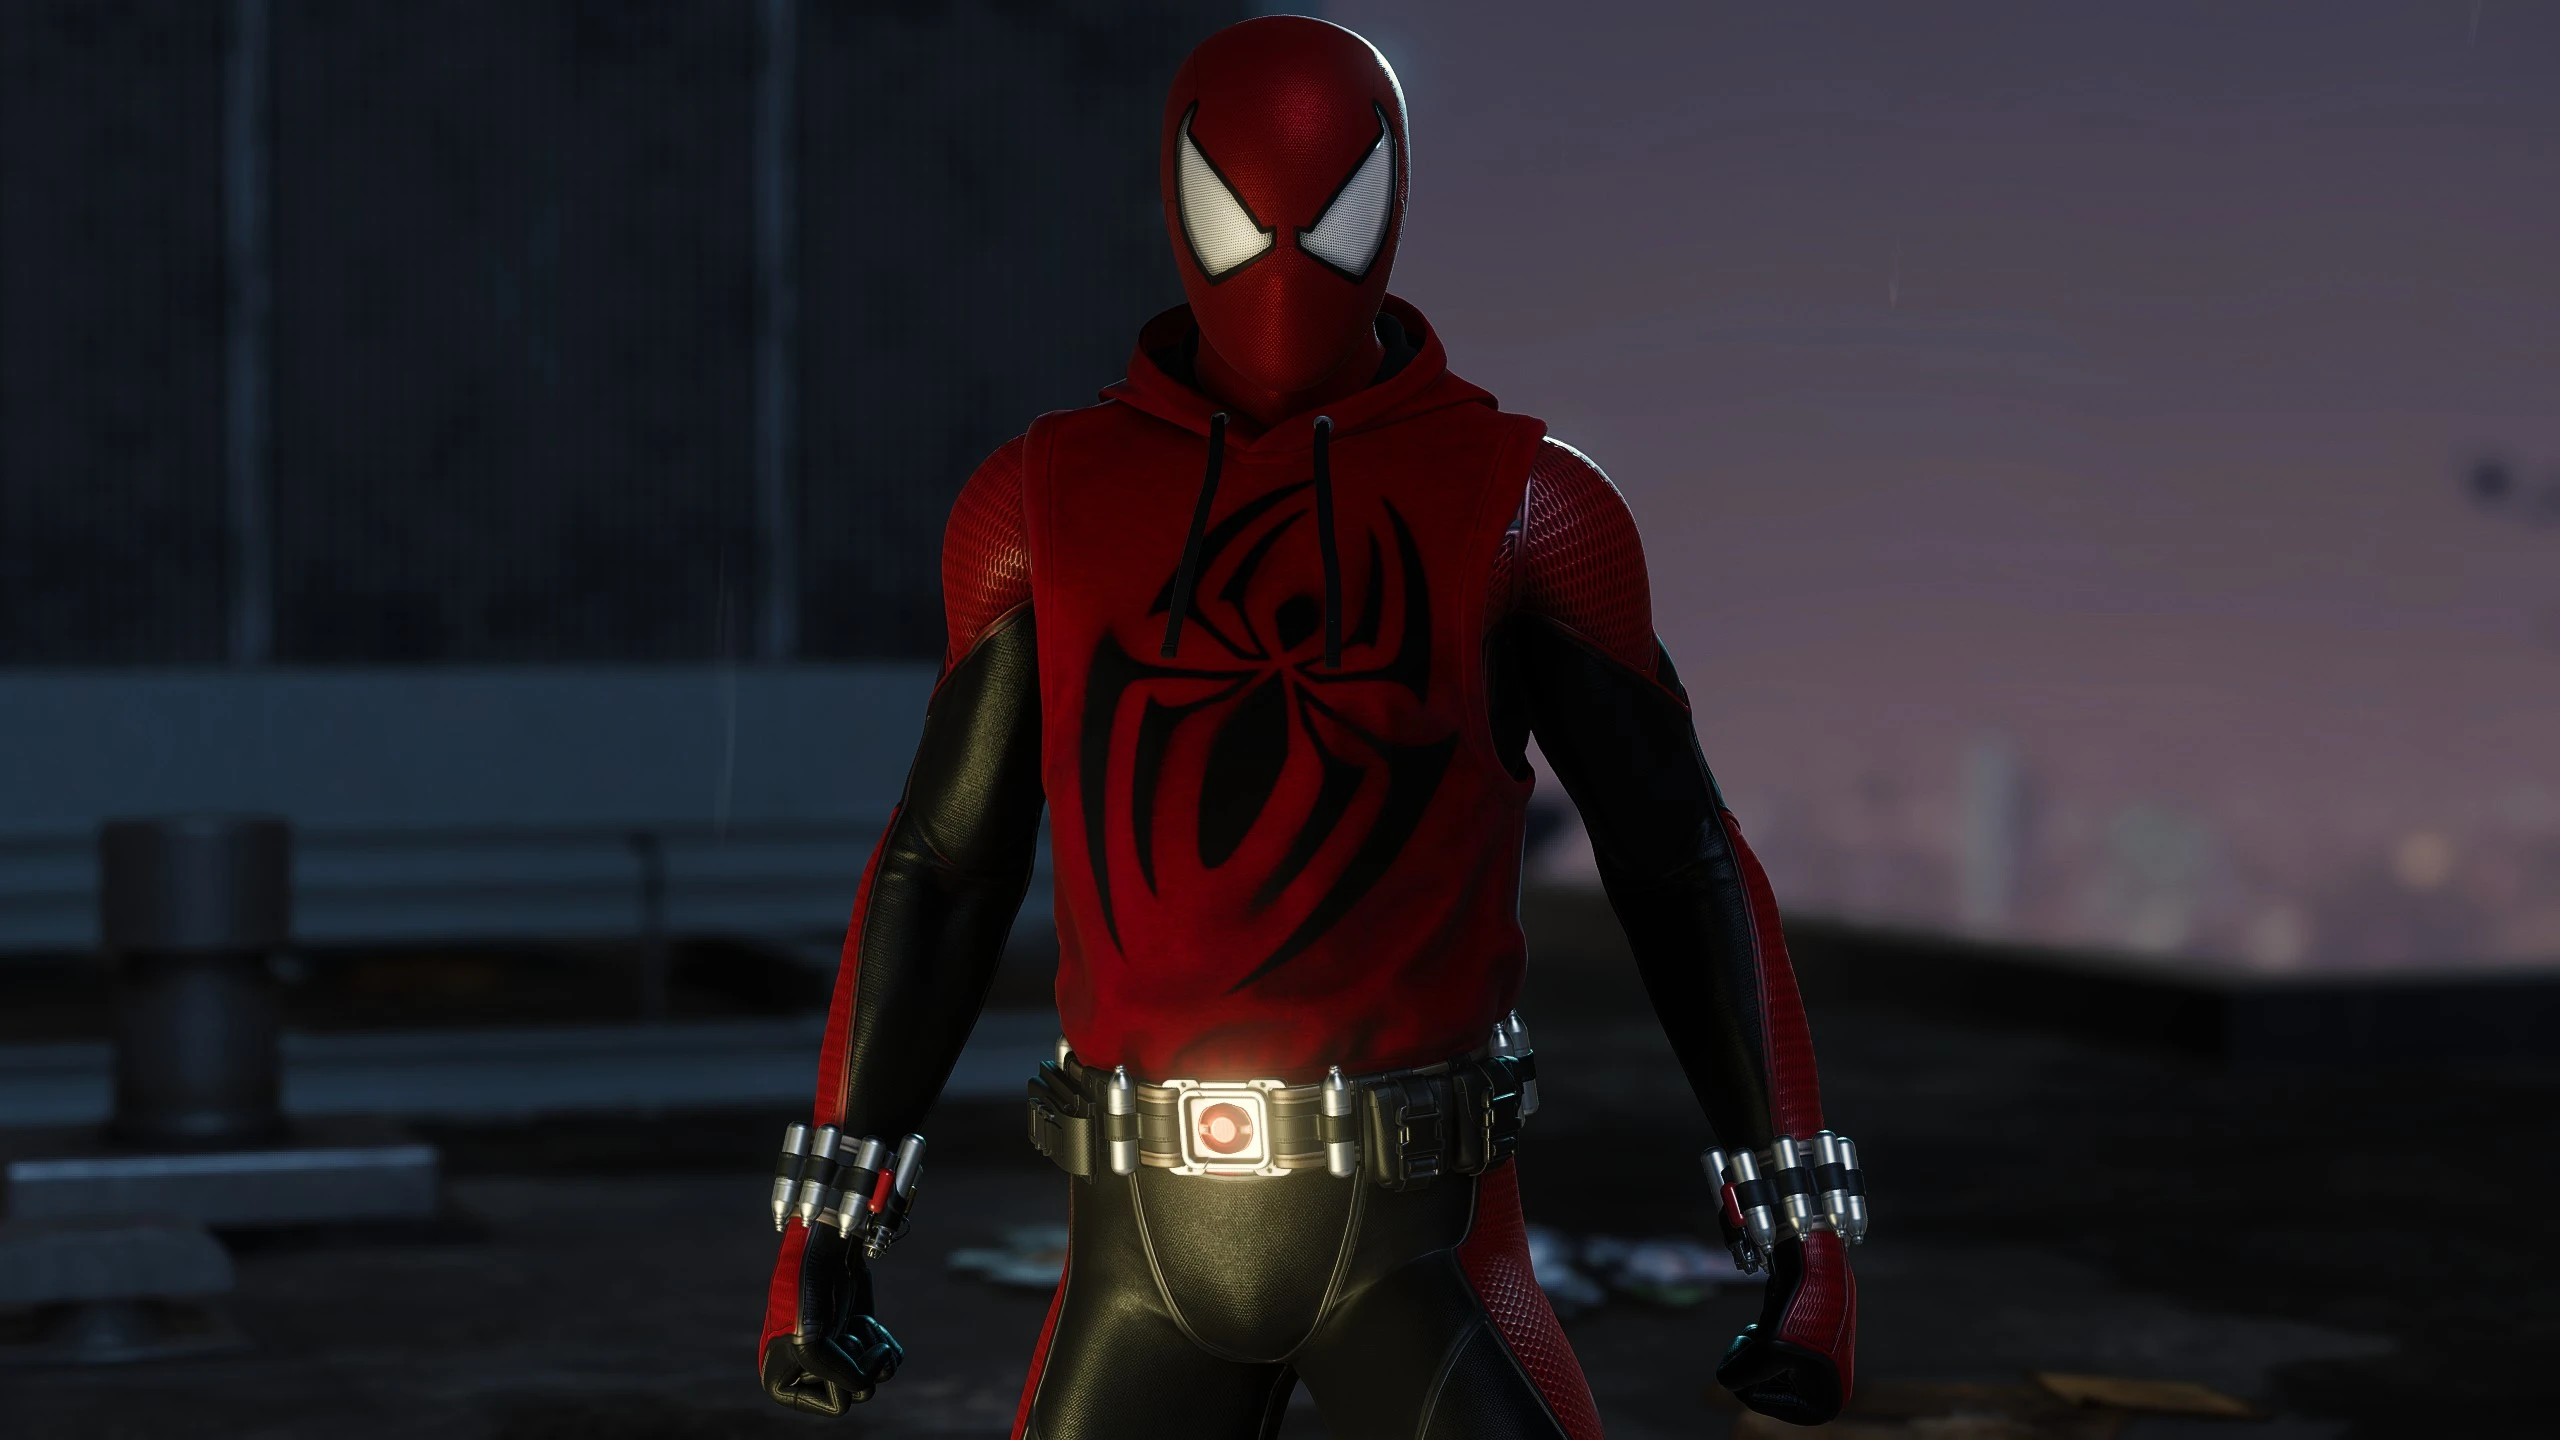 Classic Hooded Scarlet Spider MOD at Marvel's Spider-Man